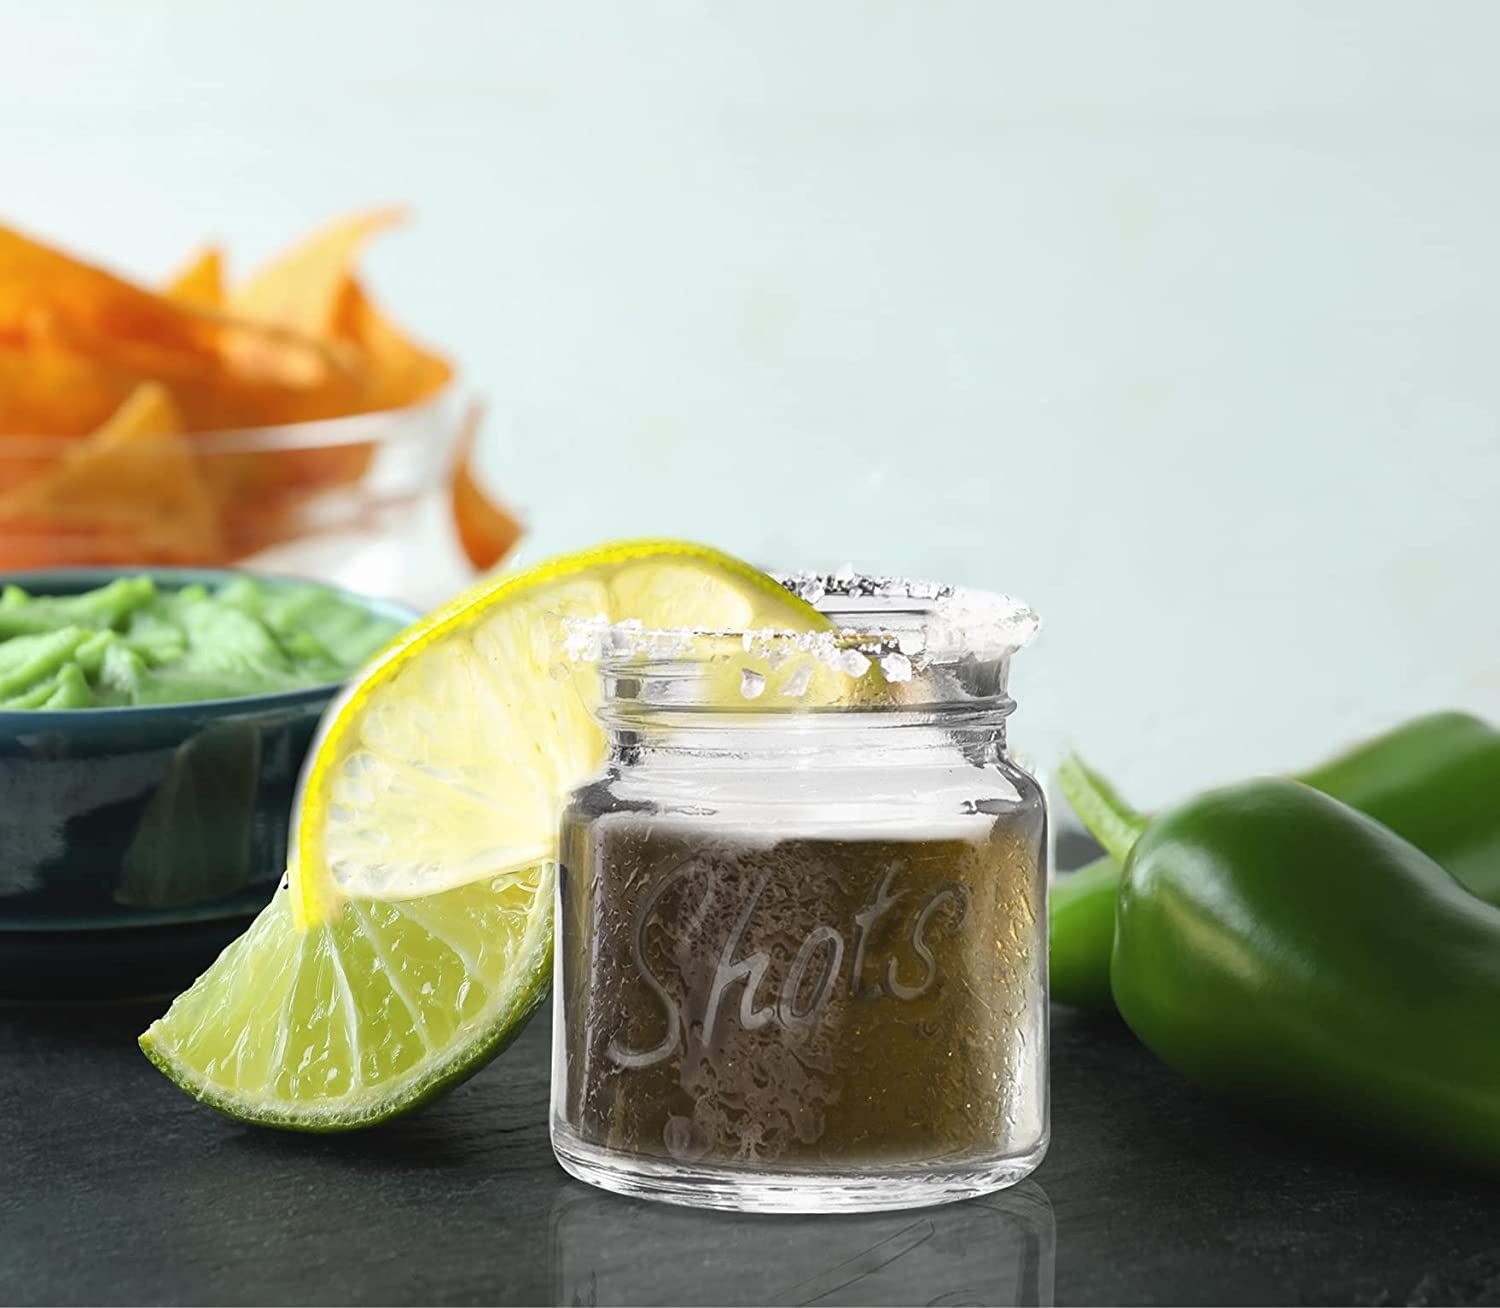 Mini Mason Jar Shot Glass - 2 oz. — The Lagunitas Schwag Shop